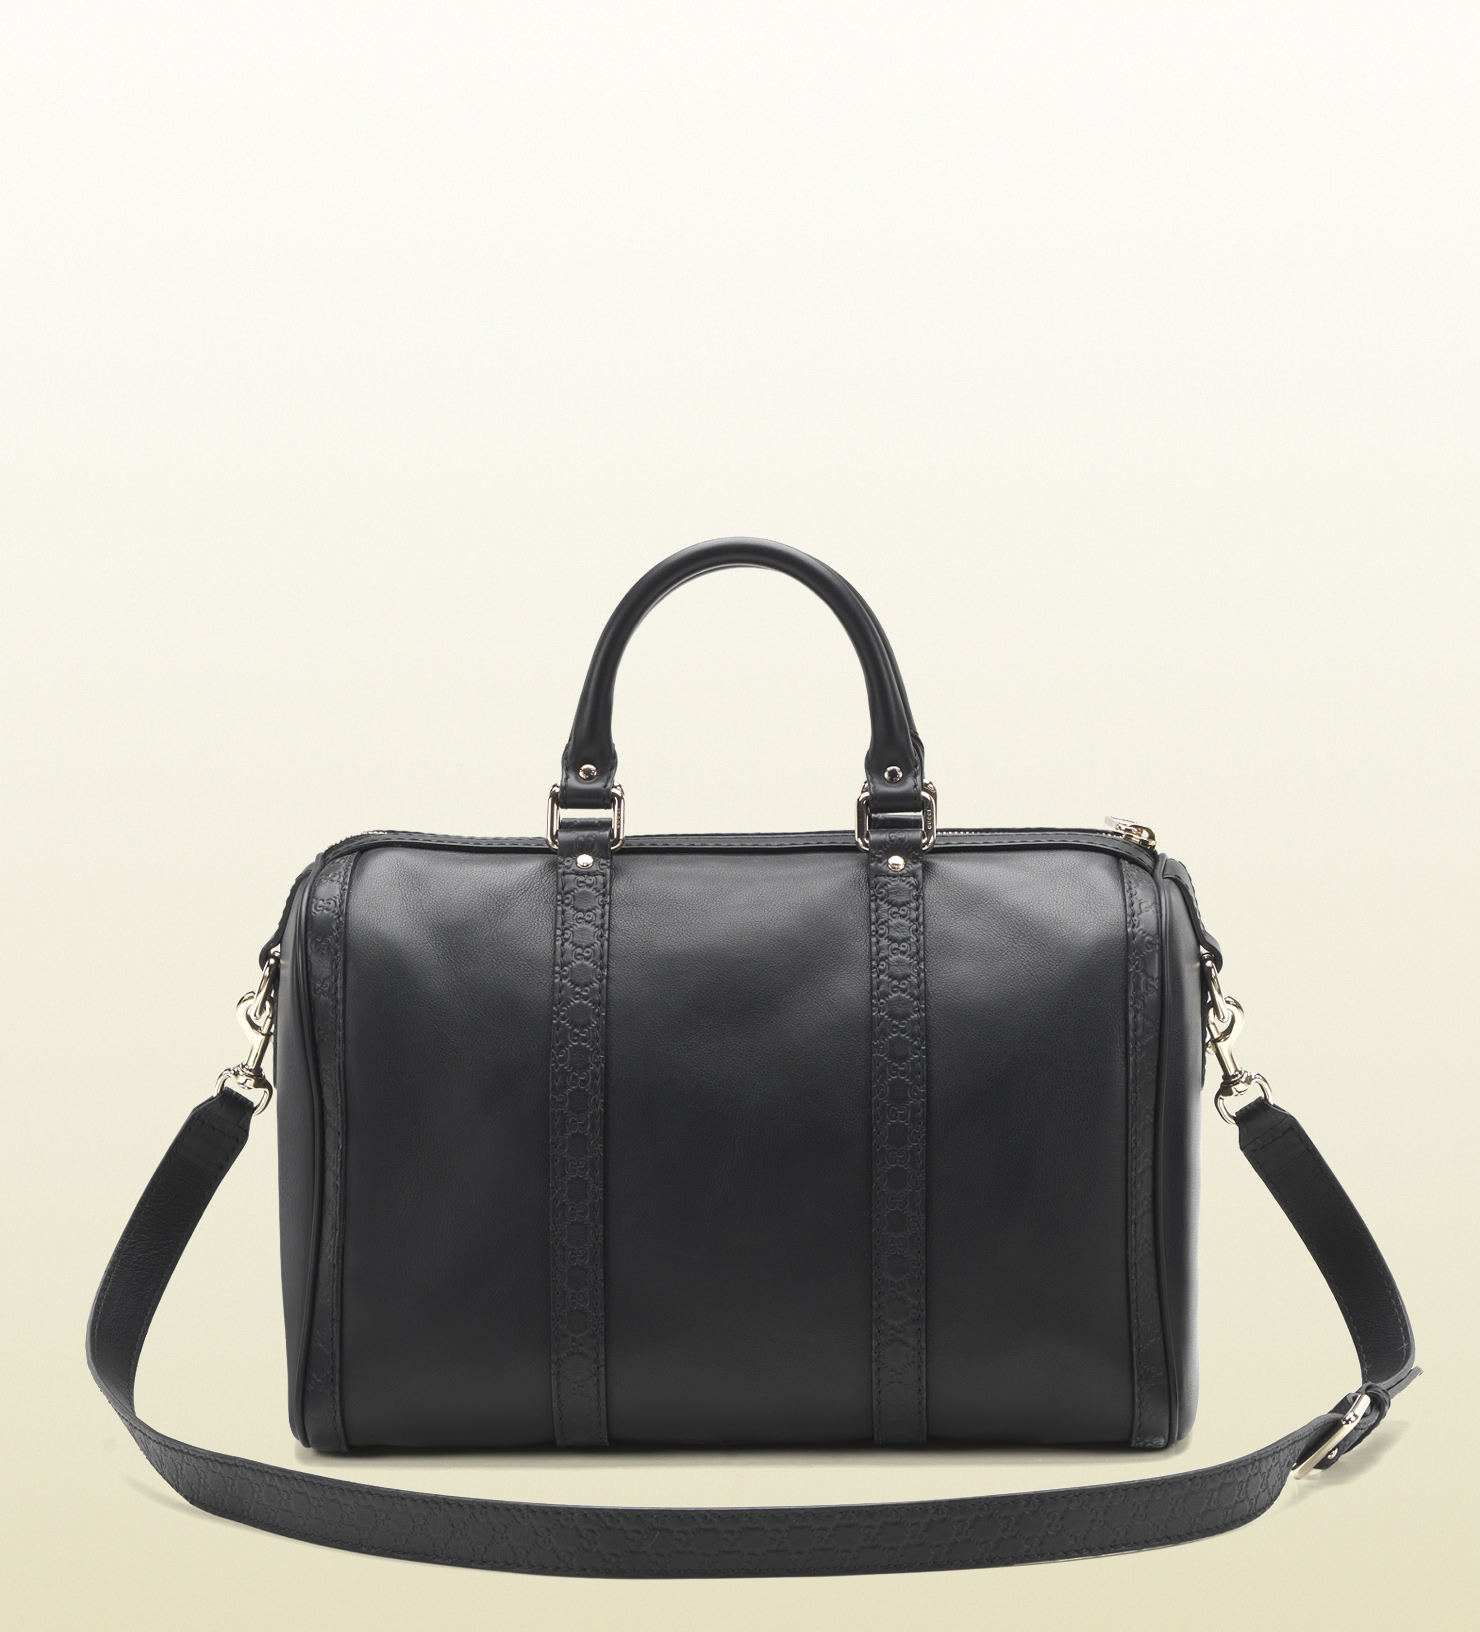 Lyst - Gucci Vintage Web Black Leather Boston Bag in Black for Men